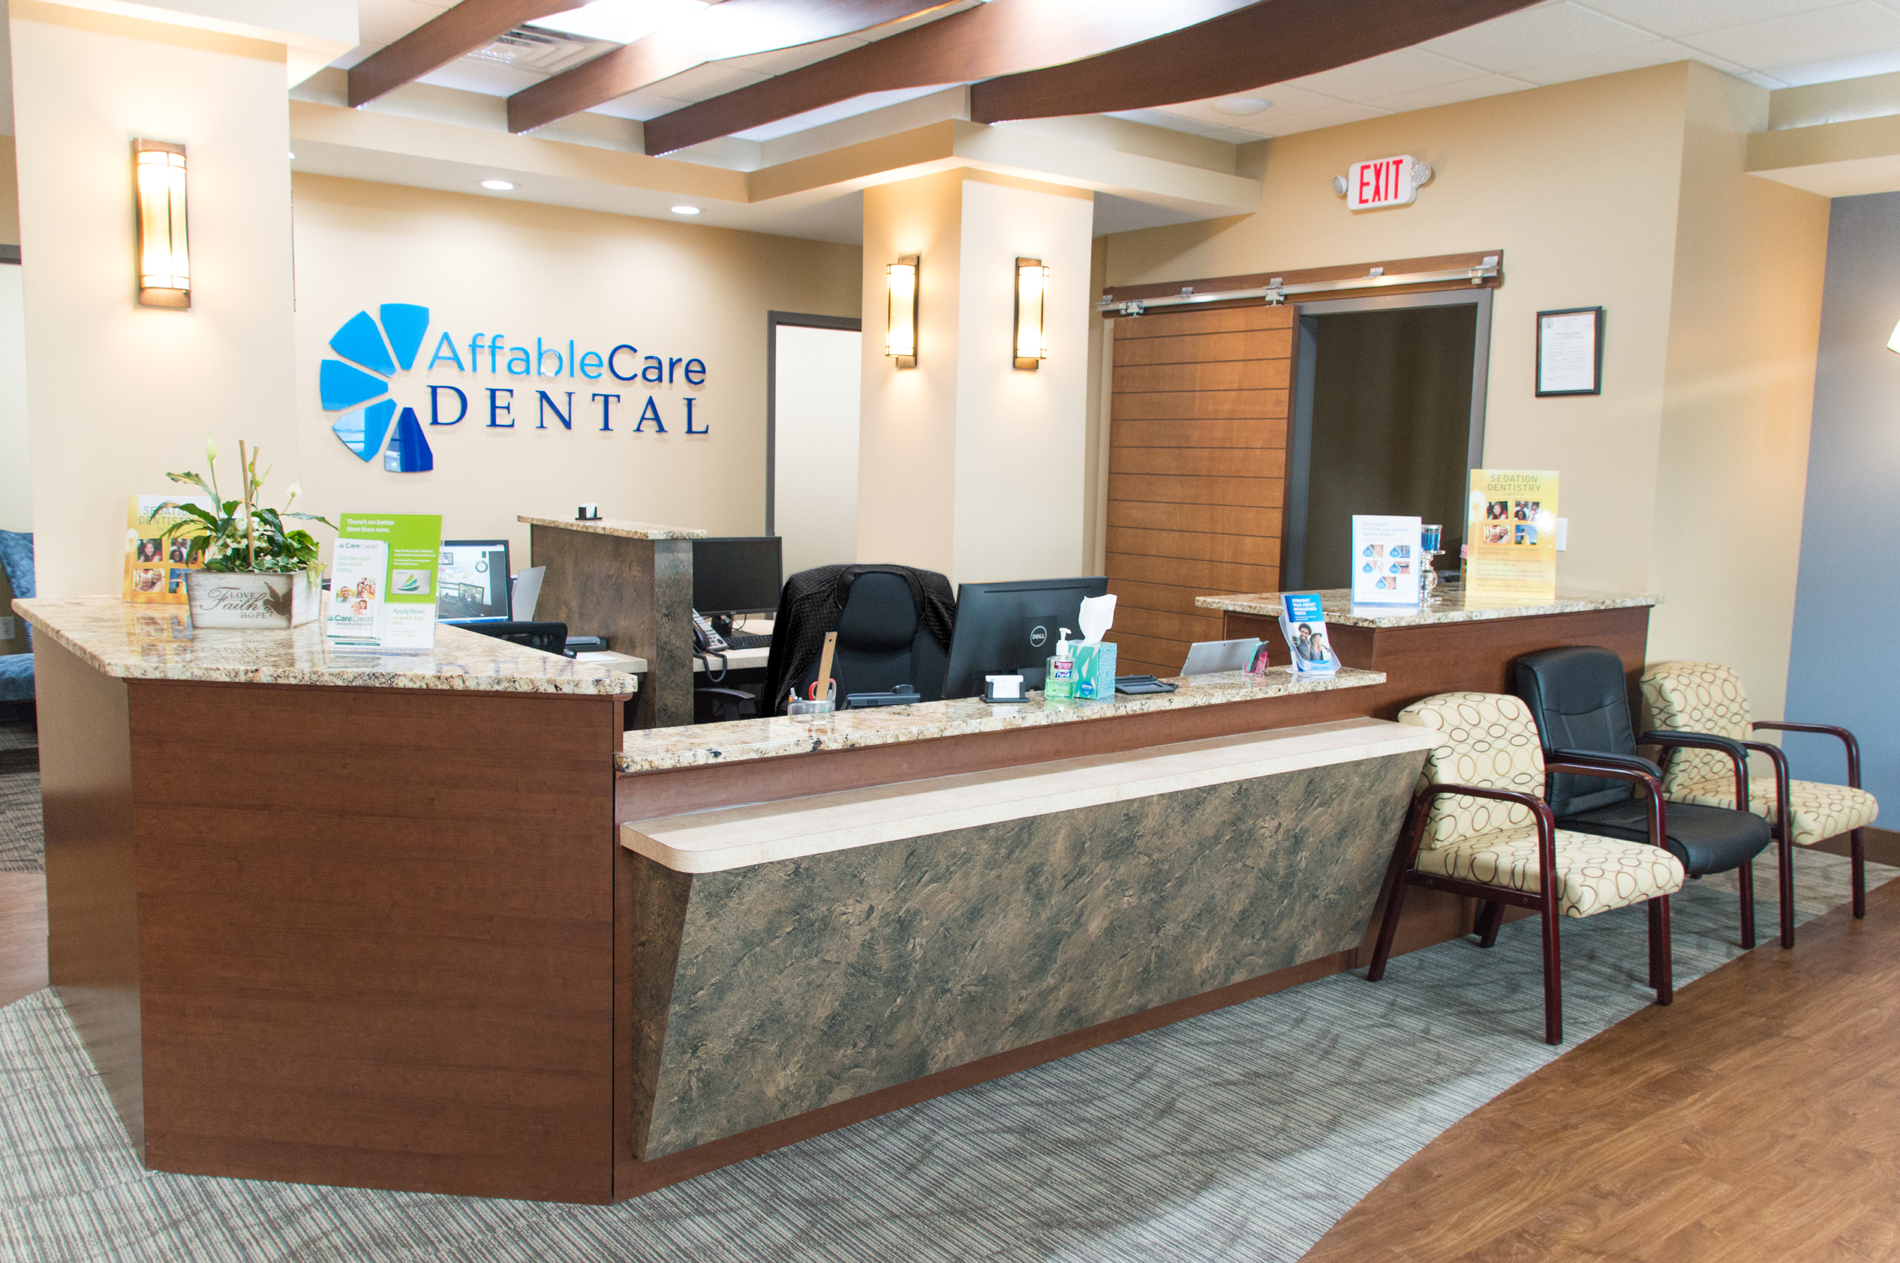 AffableCare Dental reception area